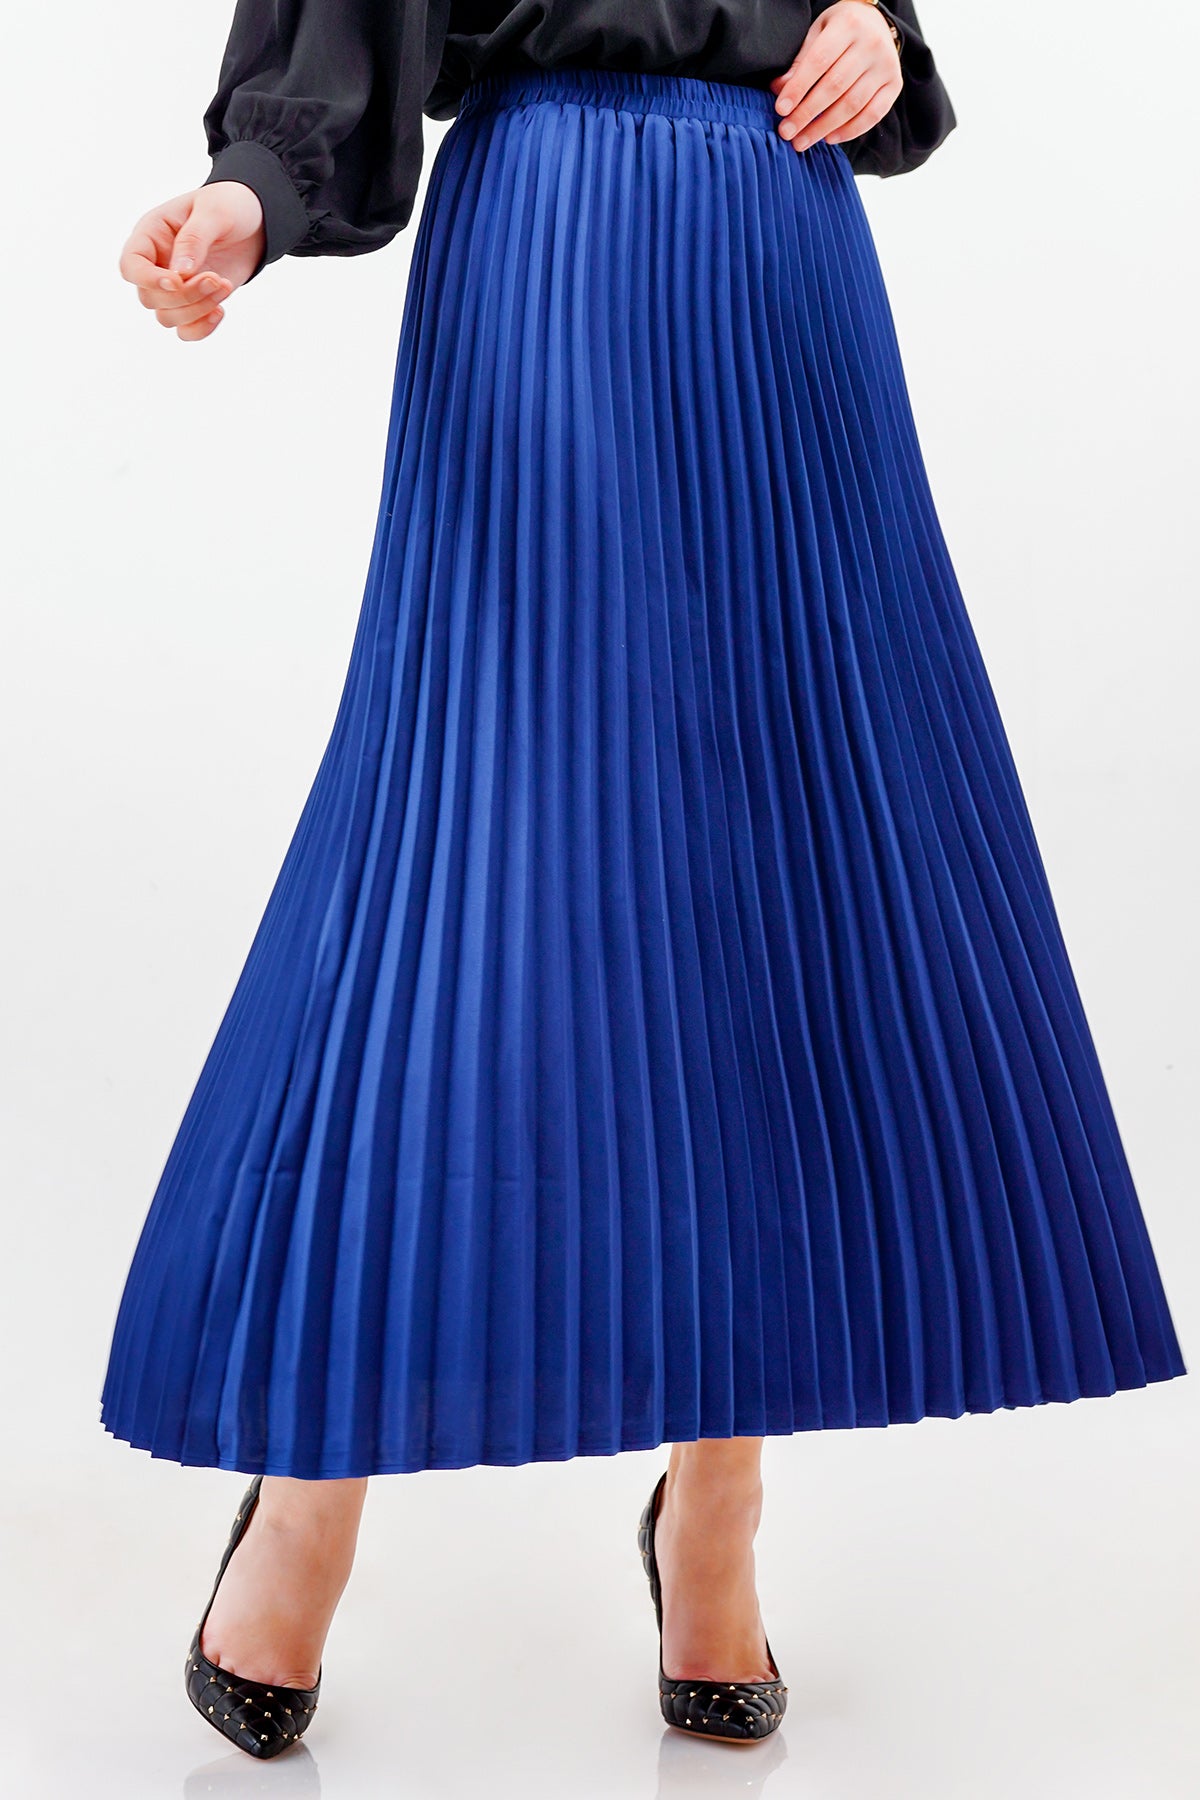 Satin Pleats Skirt - Royal Blue